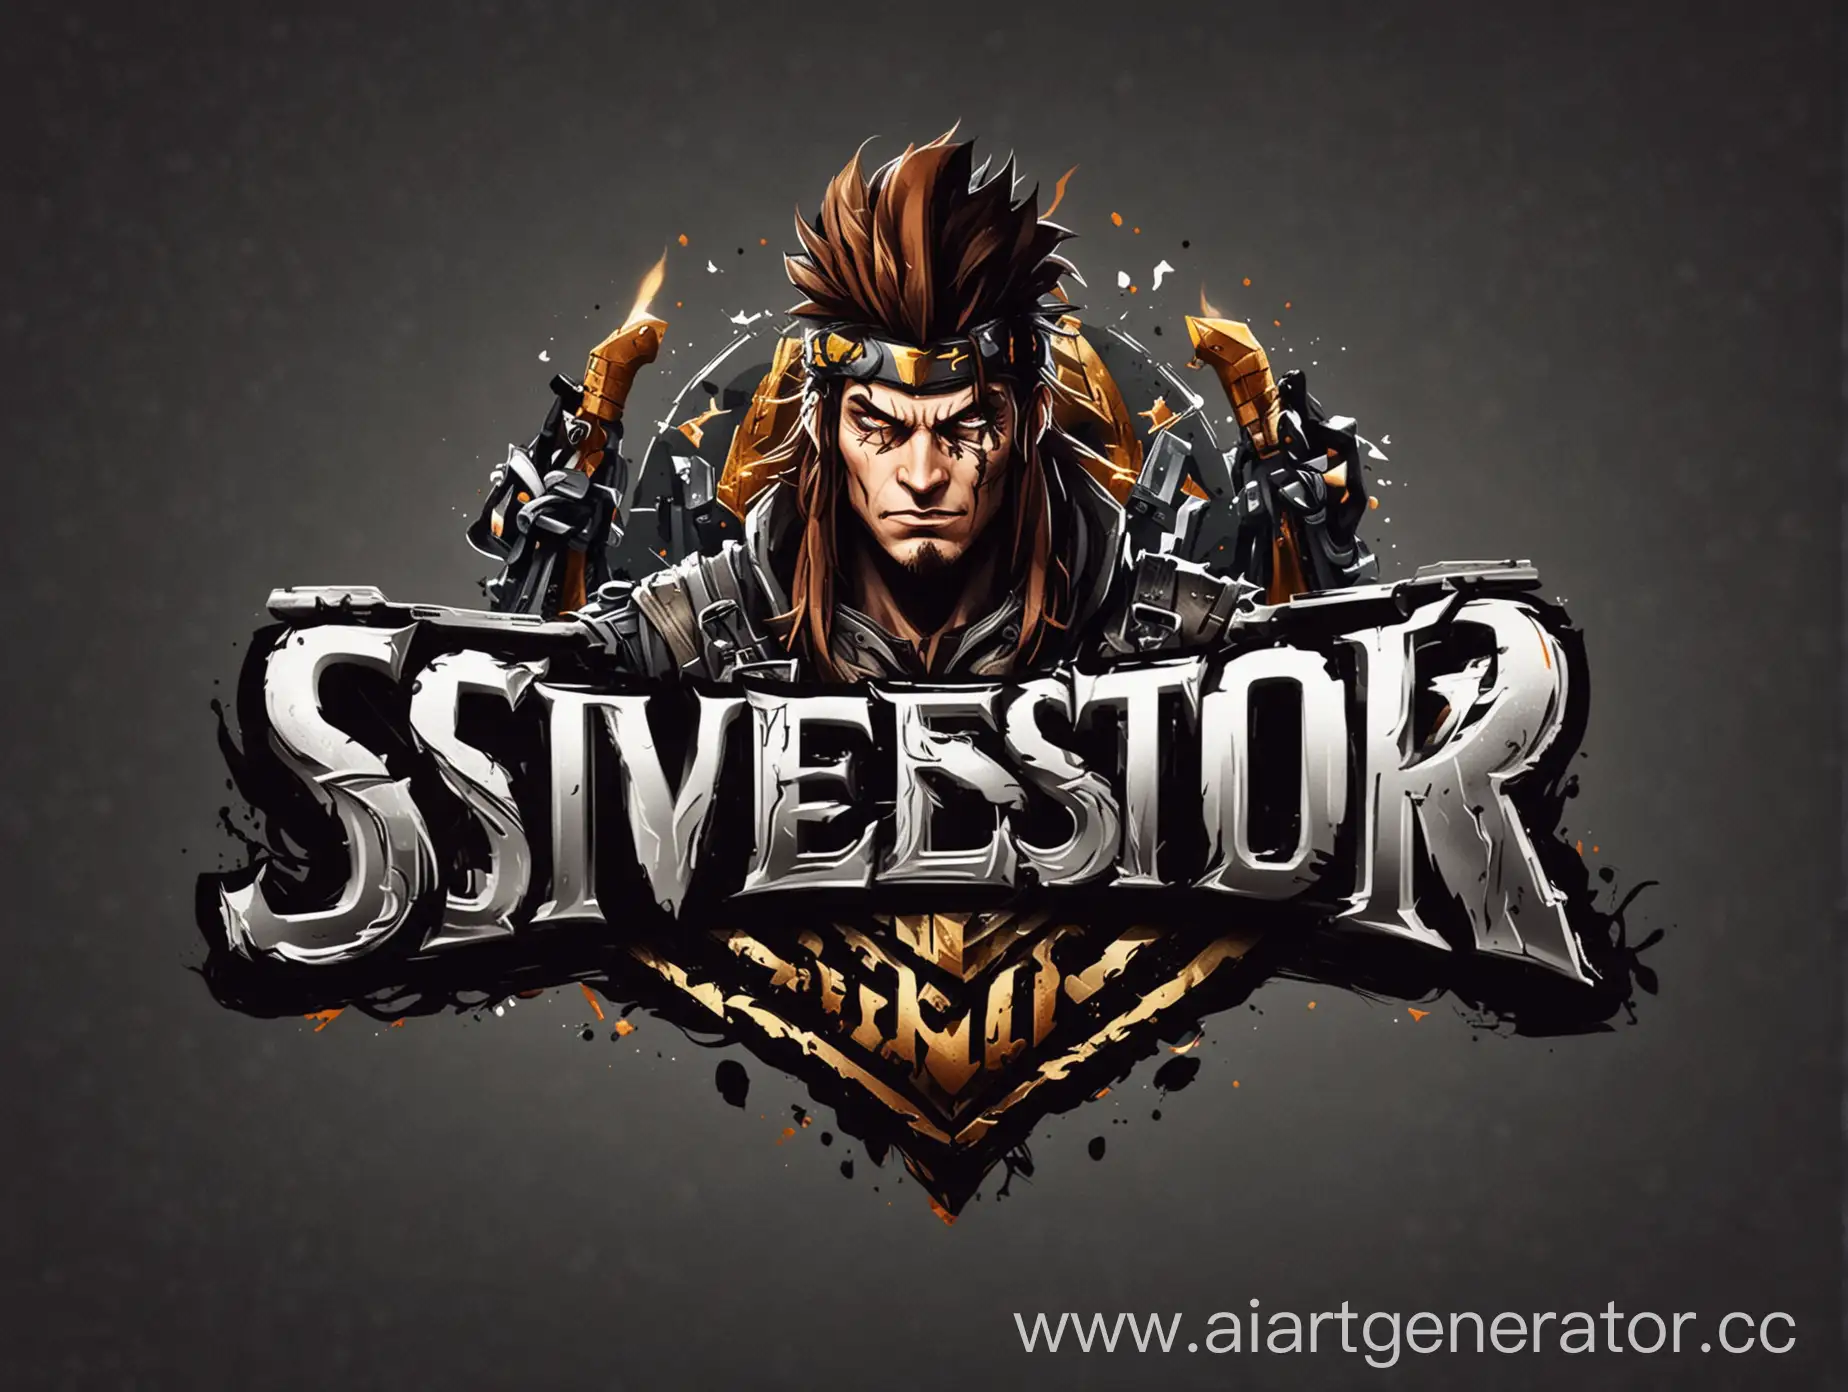 Silvestor-Gaming-Logo-Design-in-Dynamic-Video-Game-Style